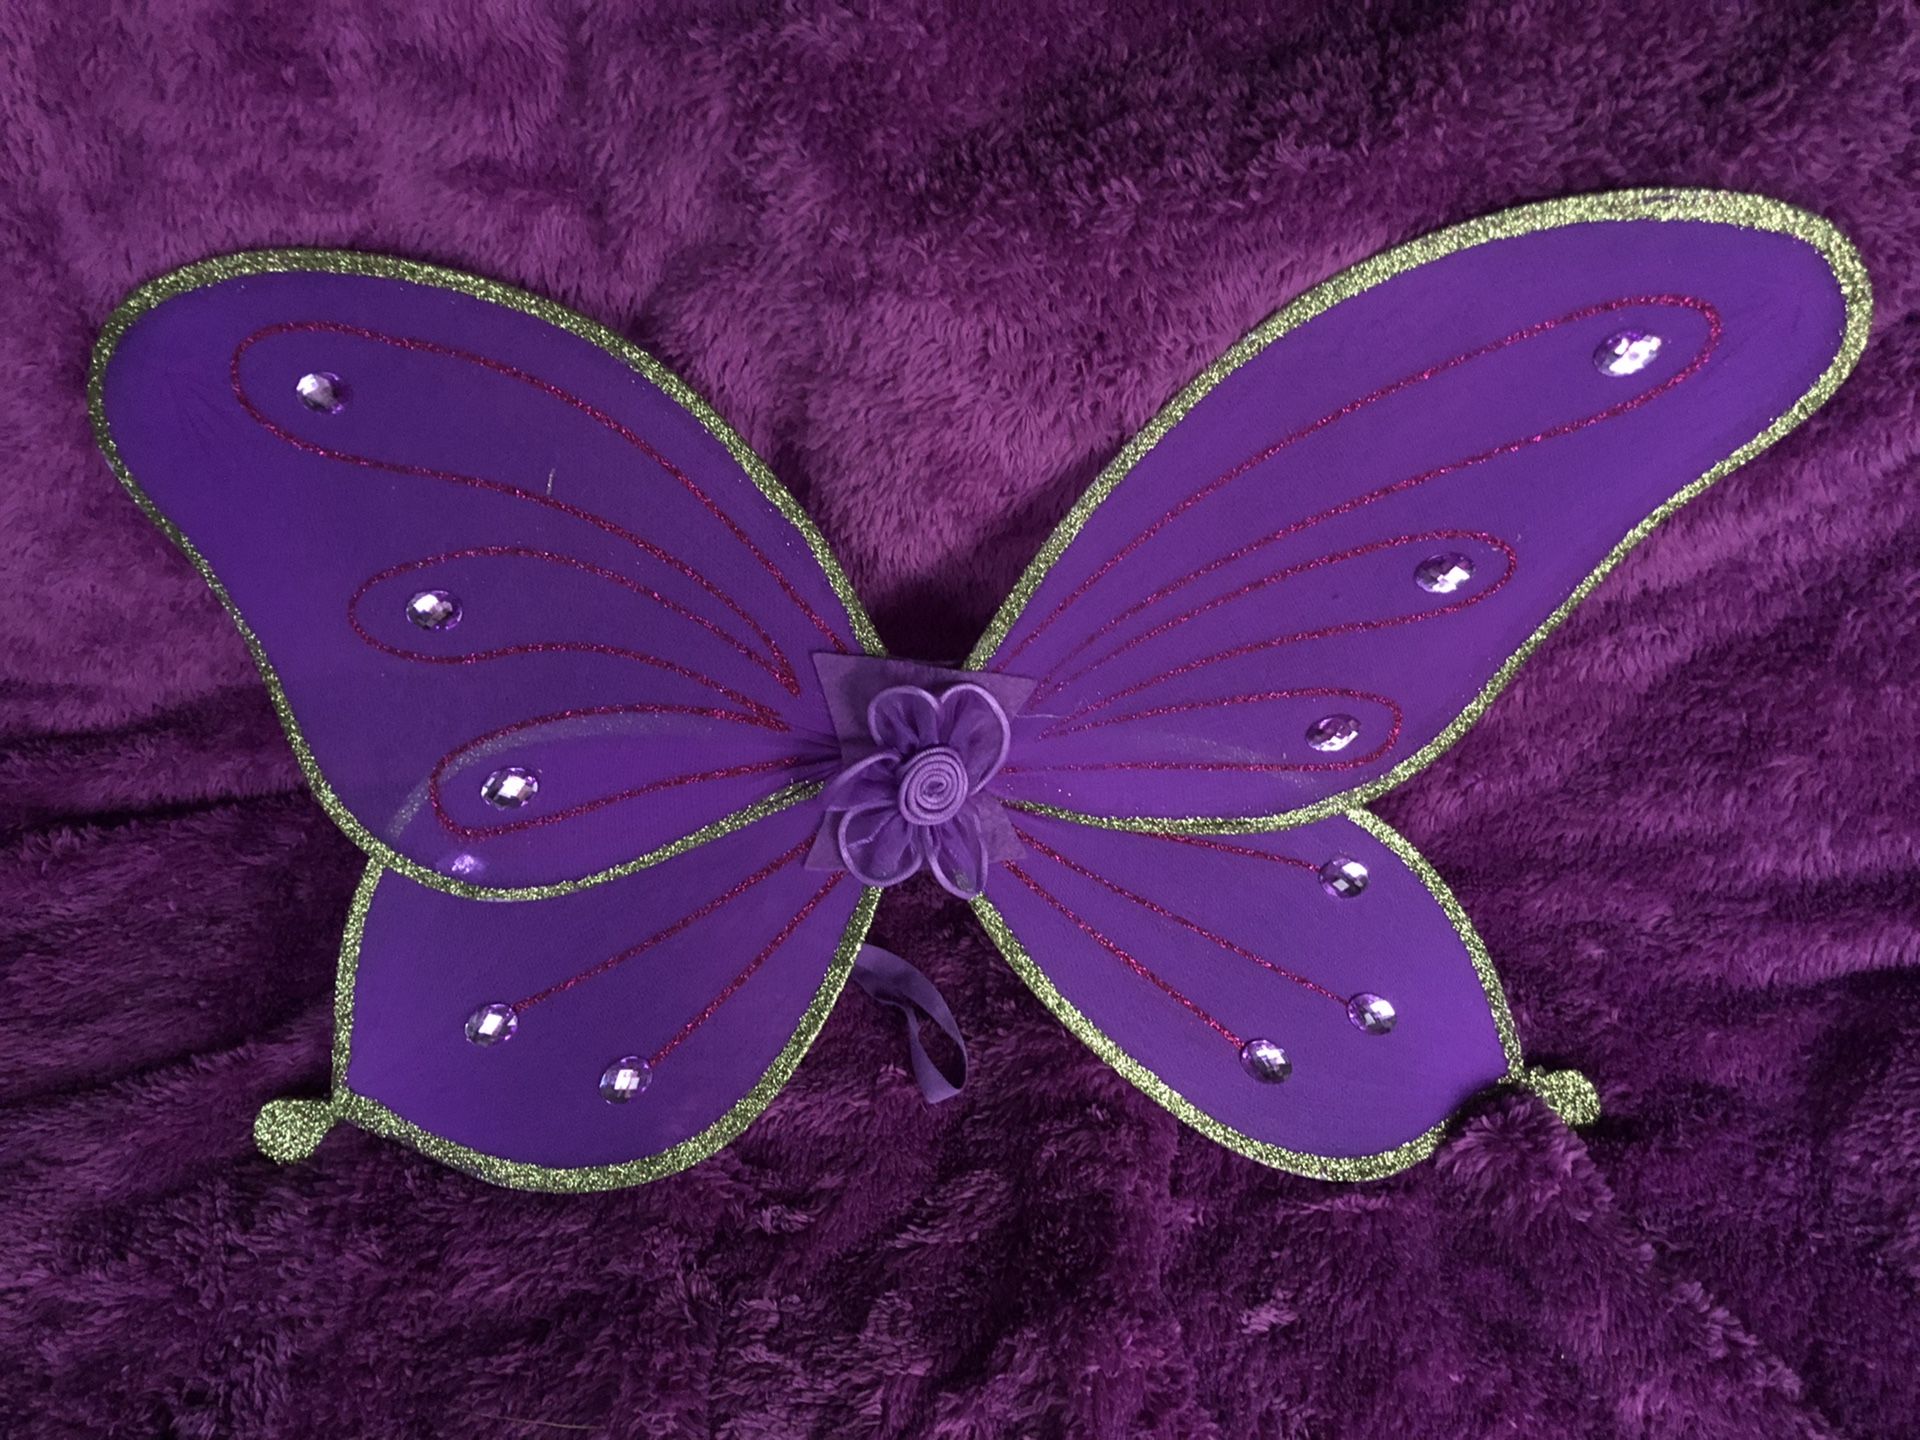 Butterfly or Fairy Wings